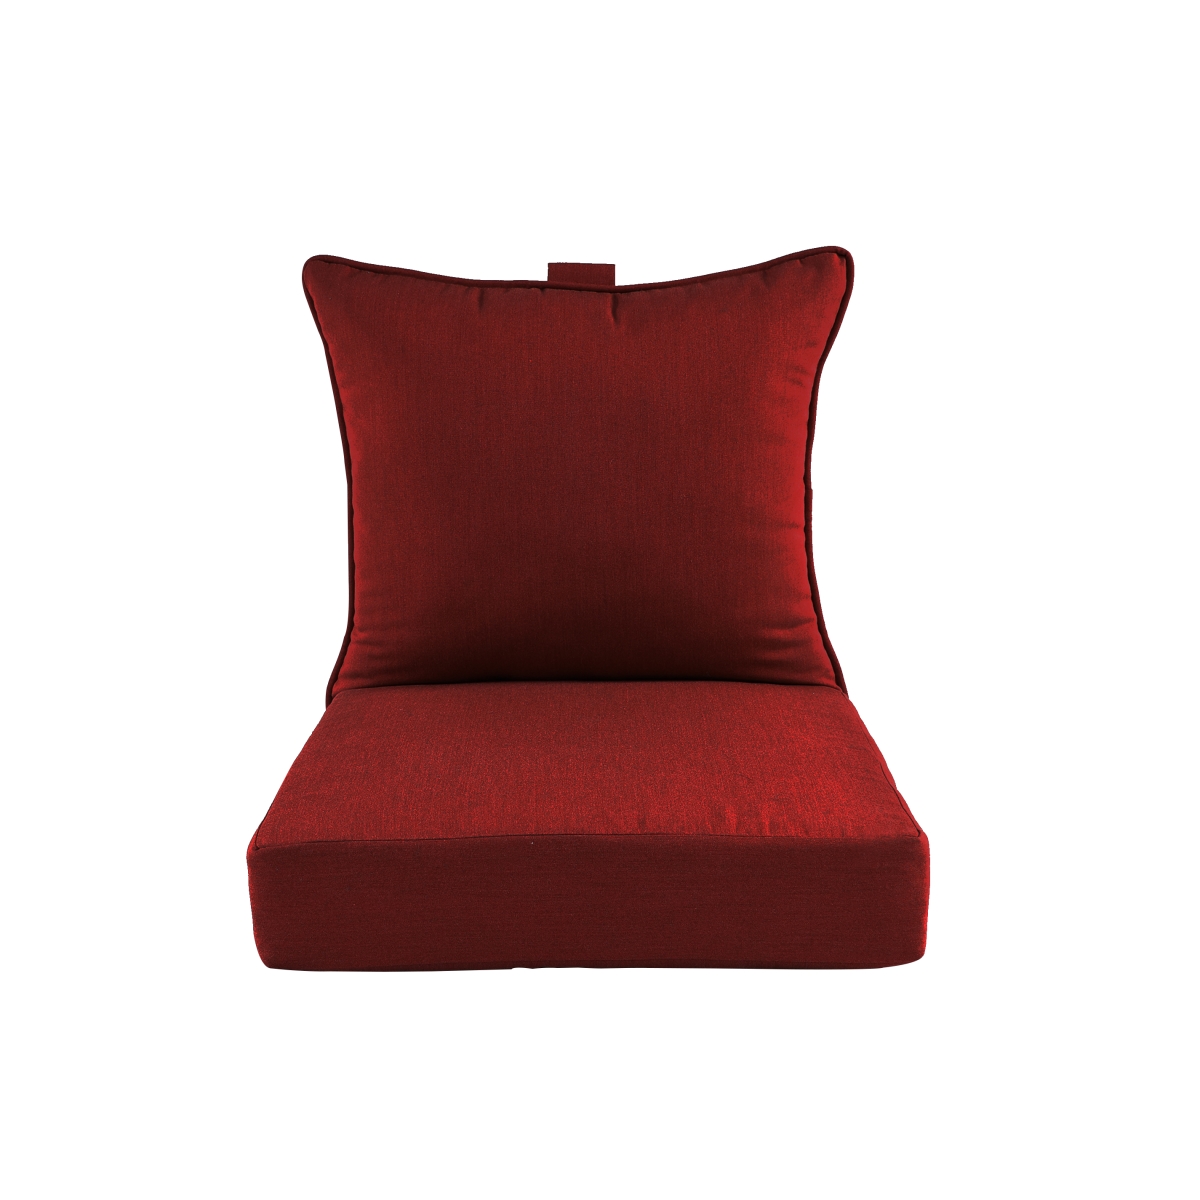 Cuds46-sda07 46.5 X 24 In. Pacifica Premium Deep Seat Lounge Cushion In Caliente